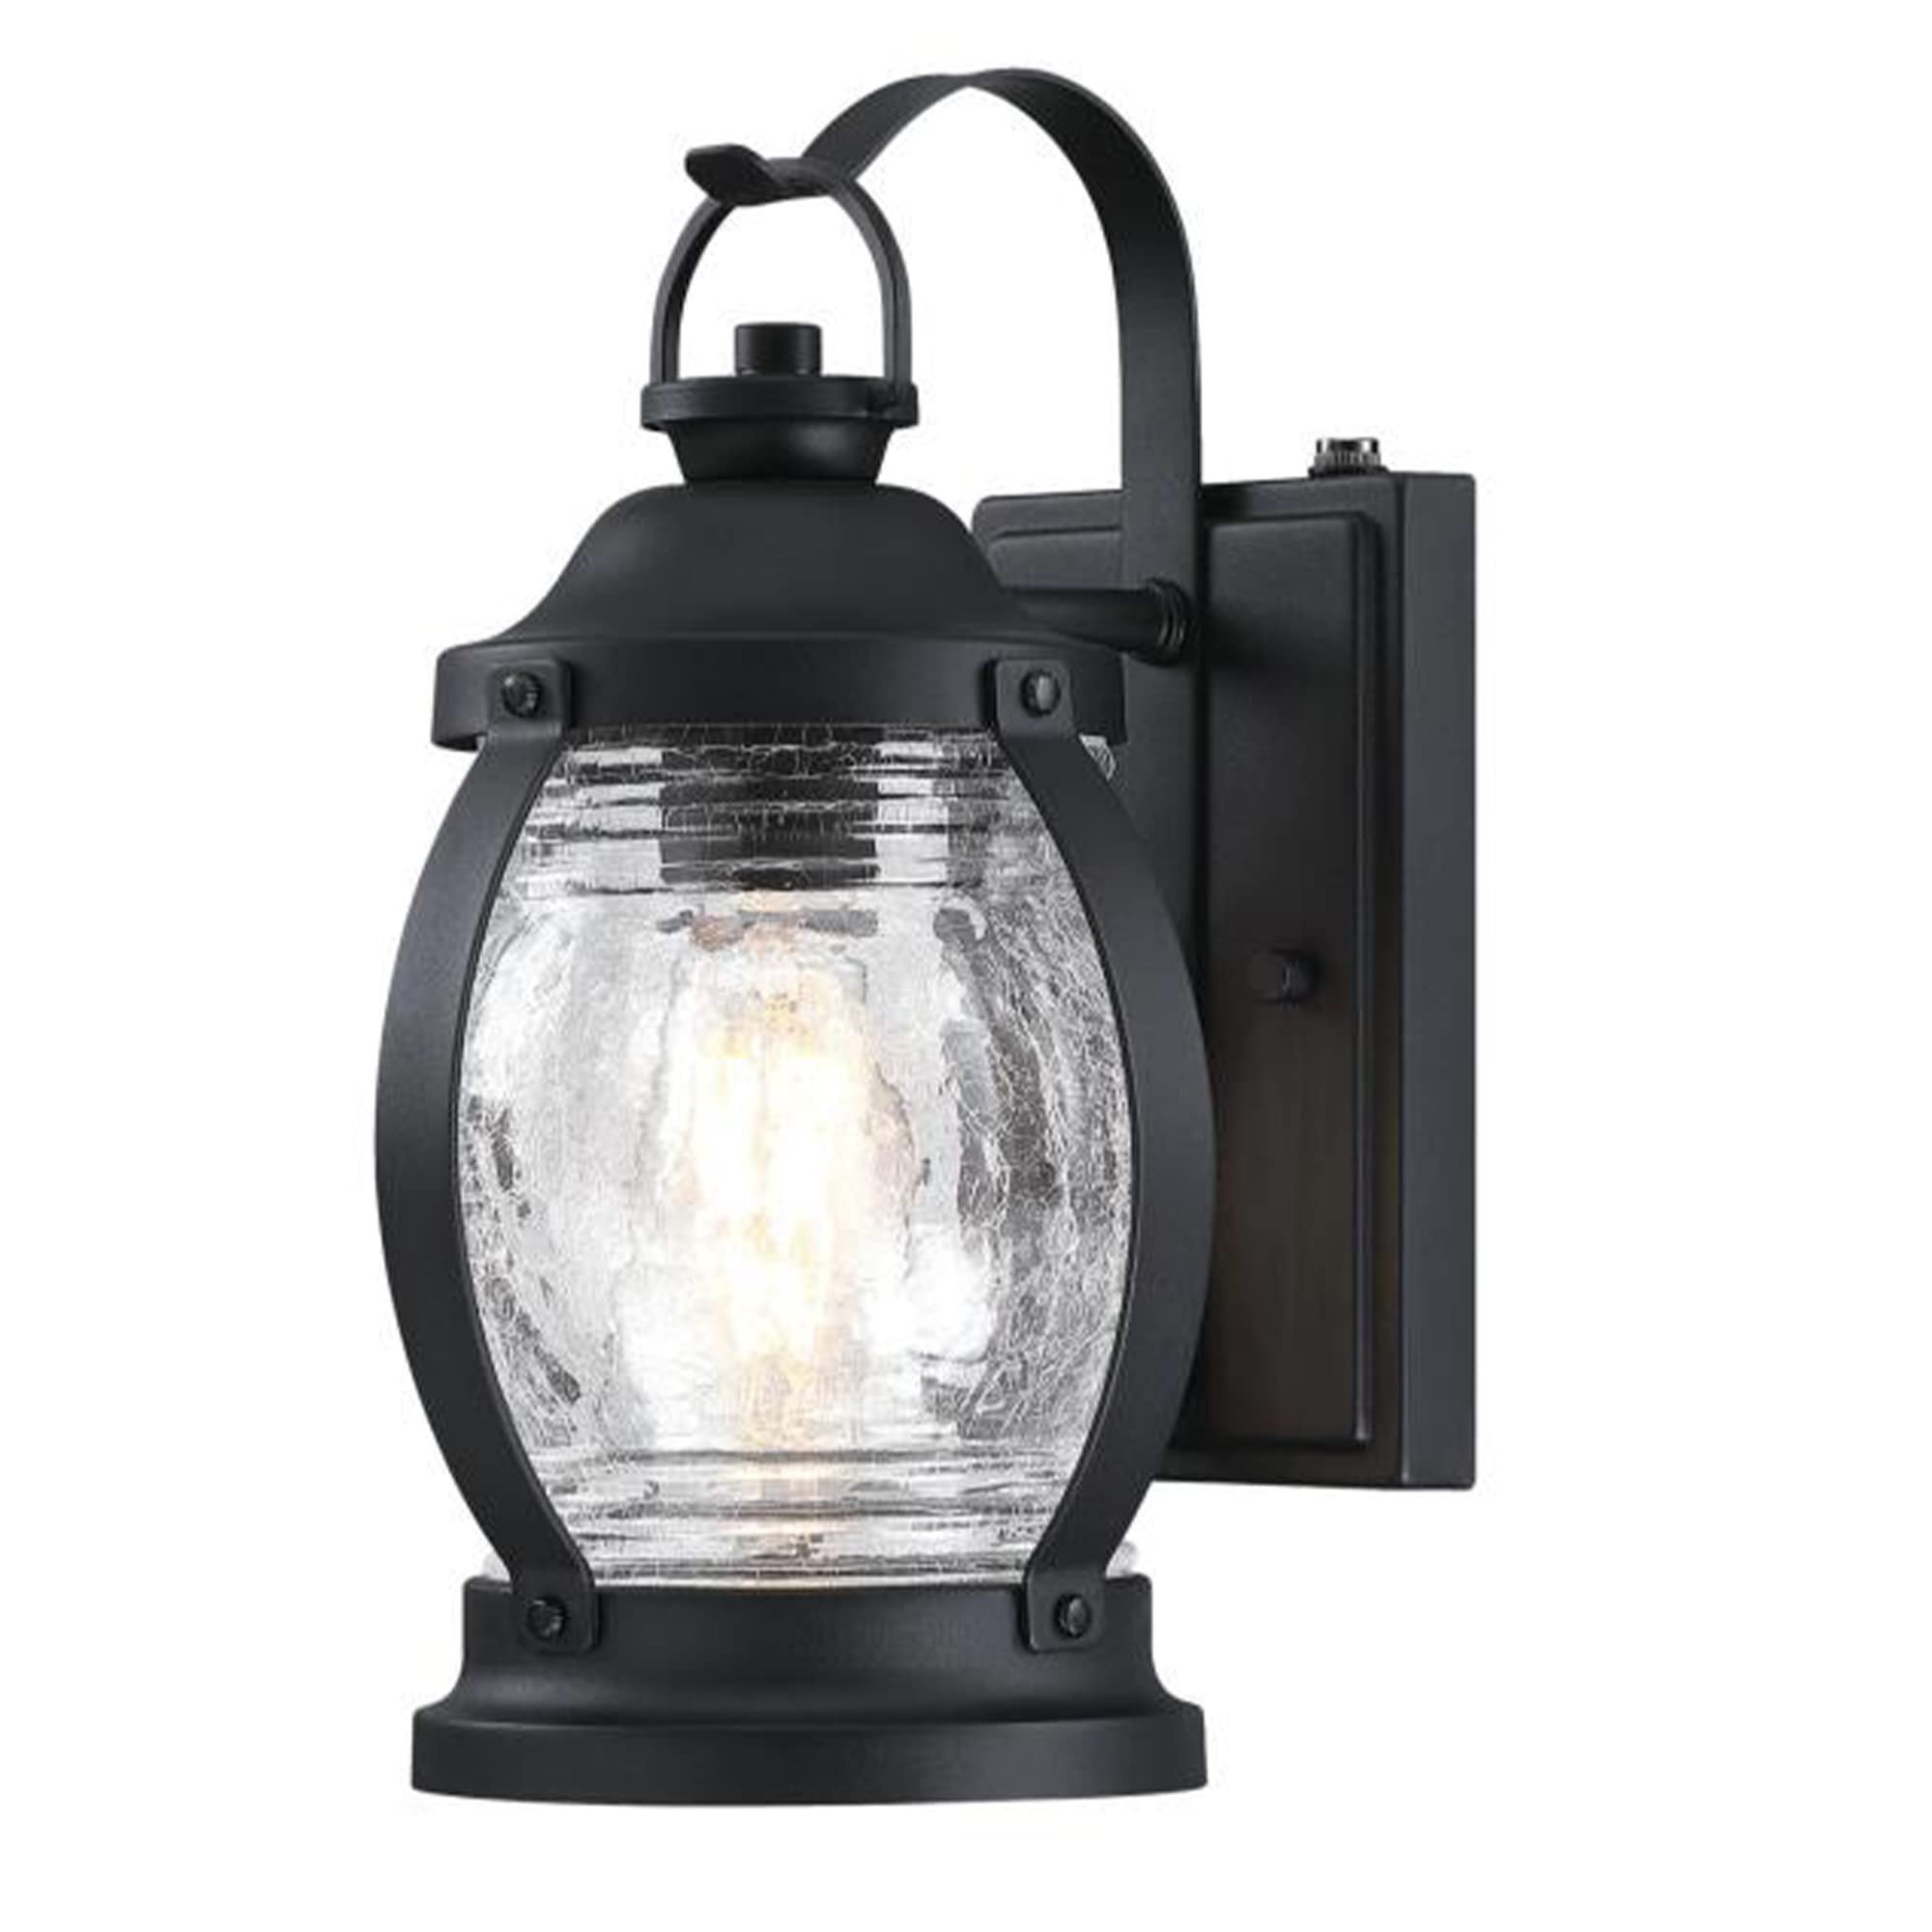 Ciata Lighting One-Light Weather Resistant, 60Watt, E26 Medium Base Indoor/Outdoor Wall Lantern Sconce/Fixture  - Like New